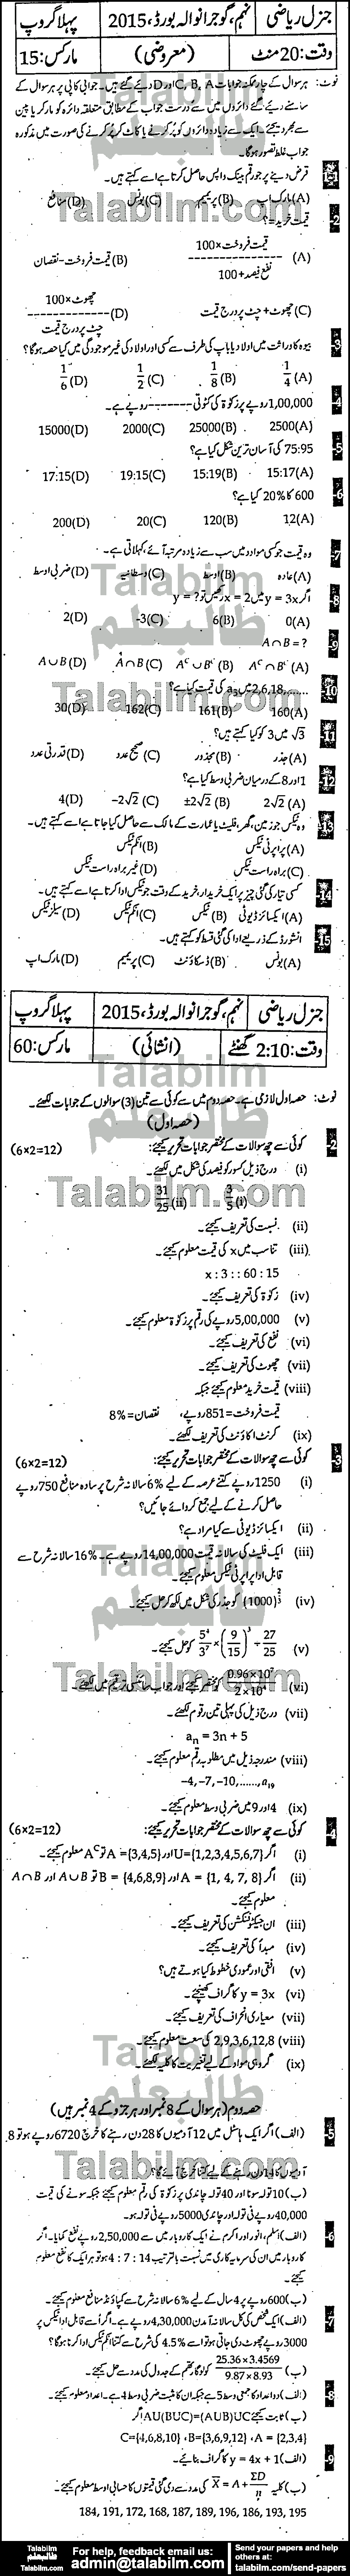 General Math 0 past paper for Urdu Medium 2015 Group-I